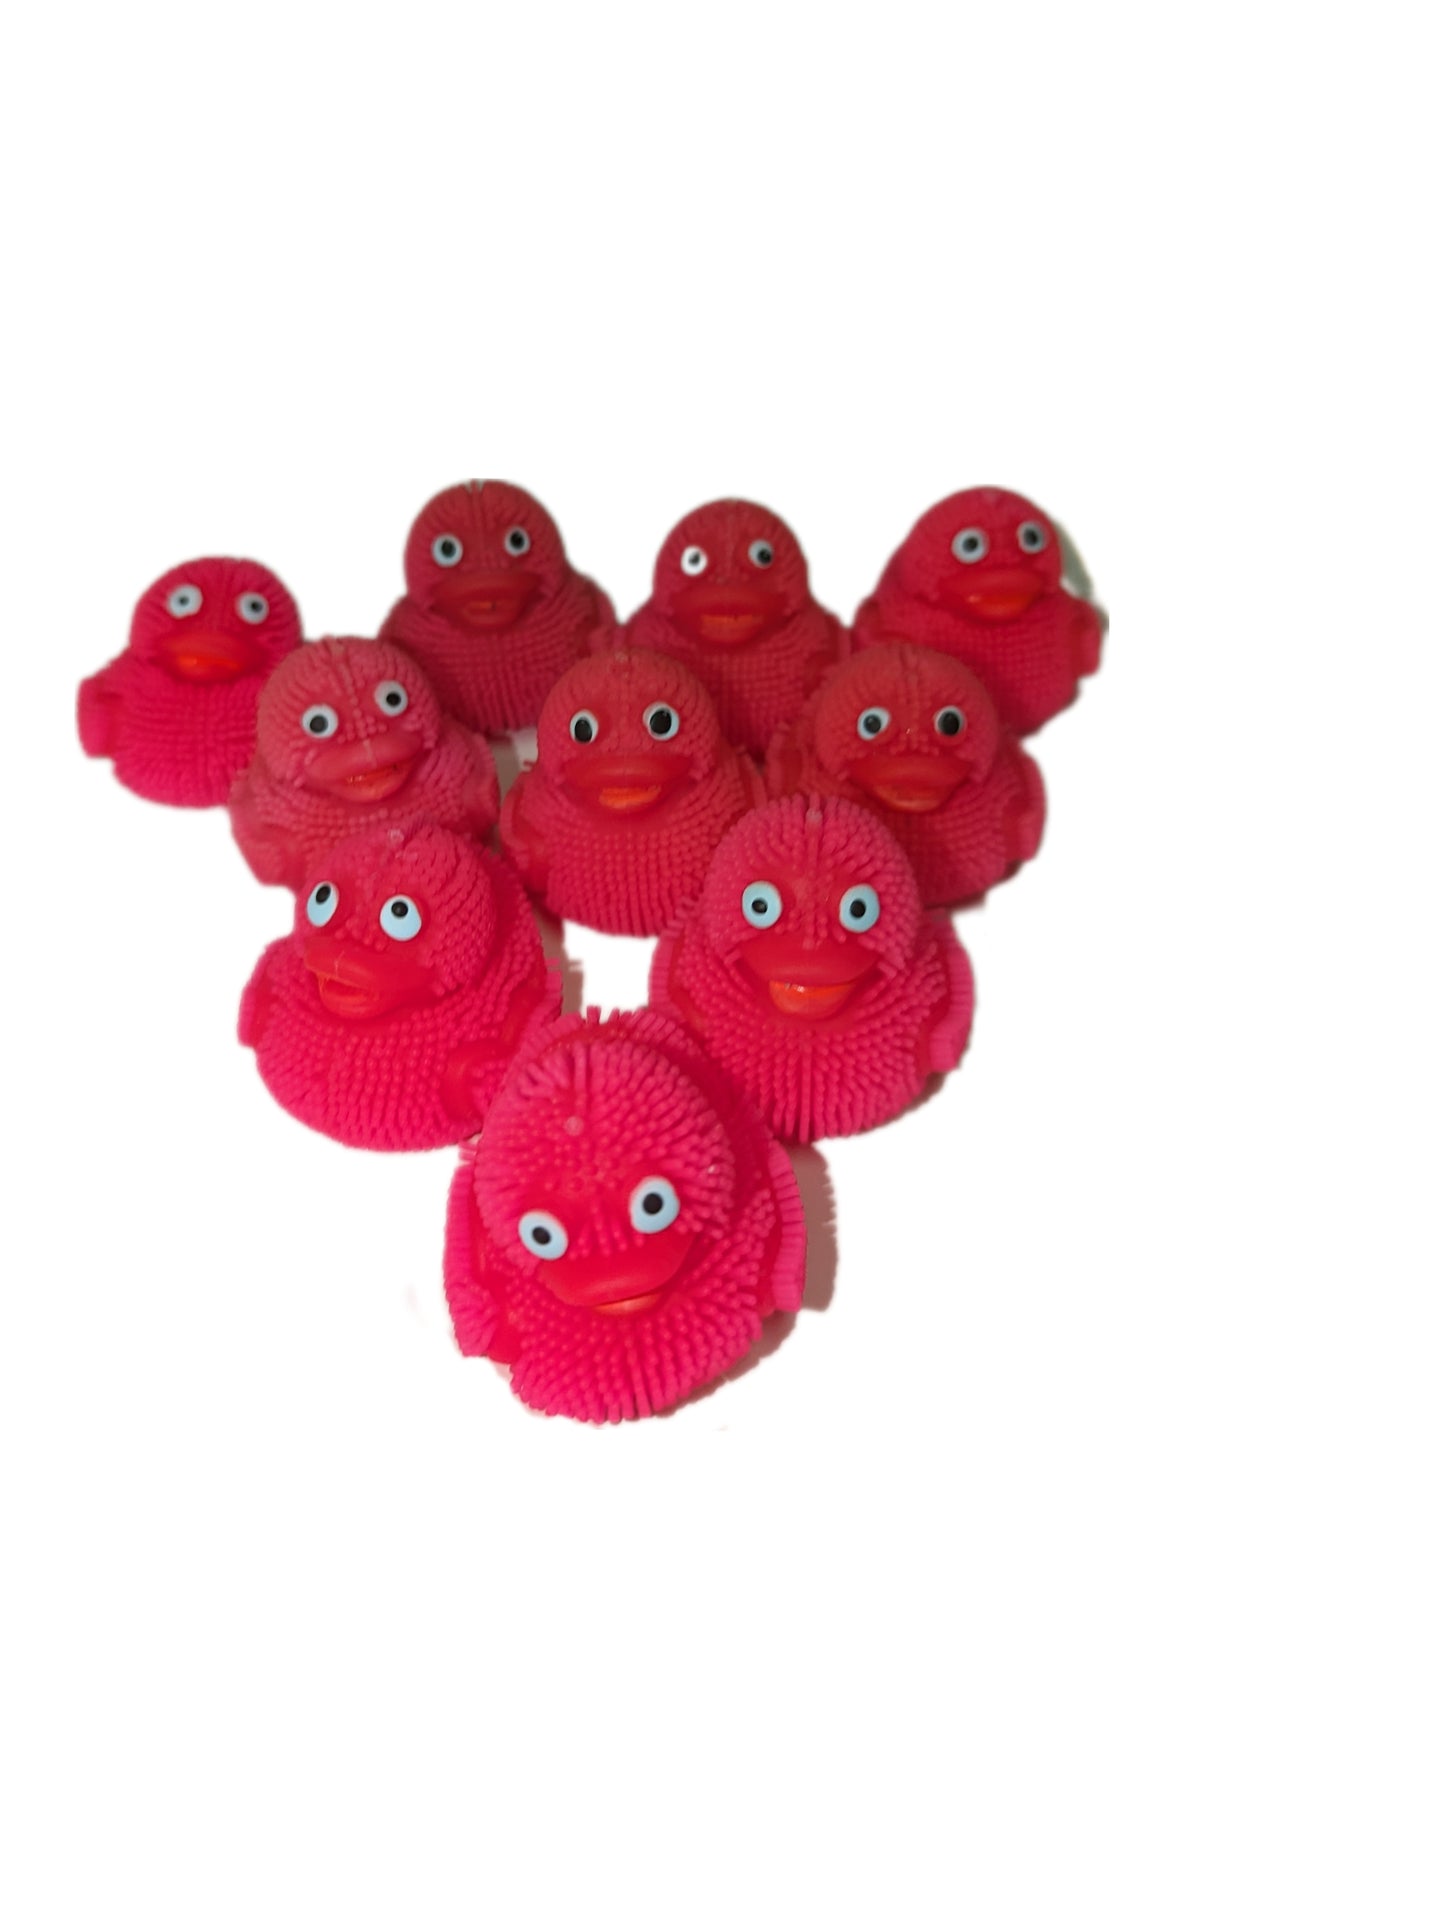 10 Pink Squishy Ducks - 2" Rubber Ducks